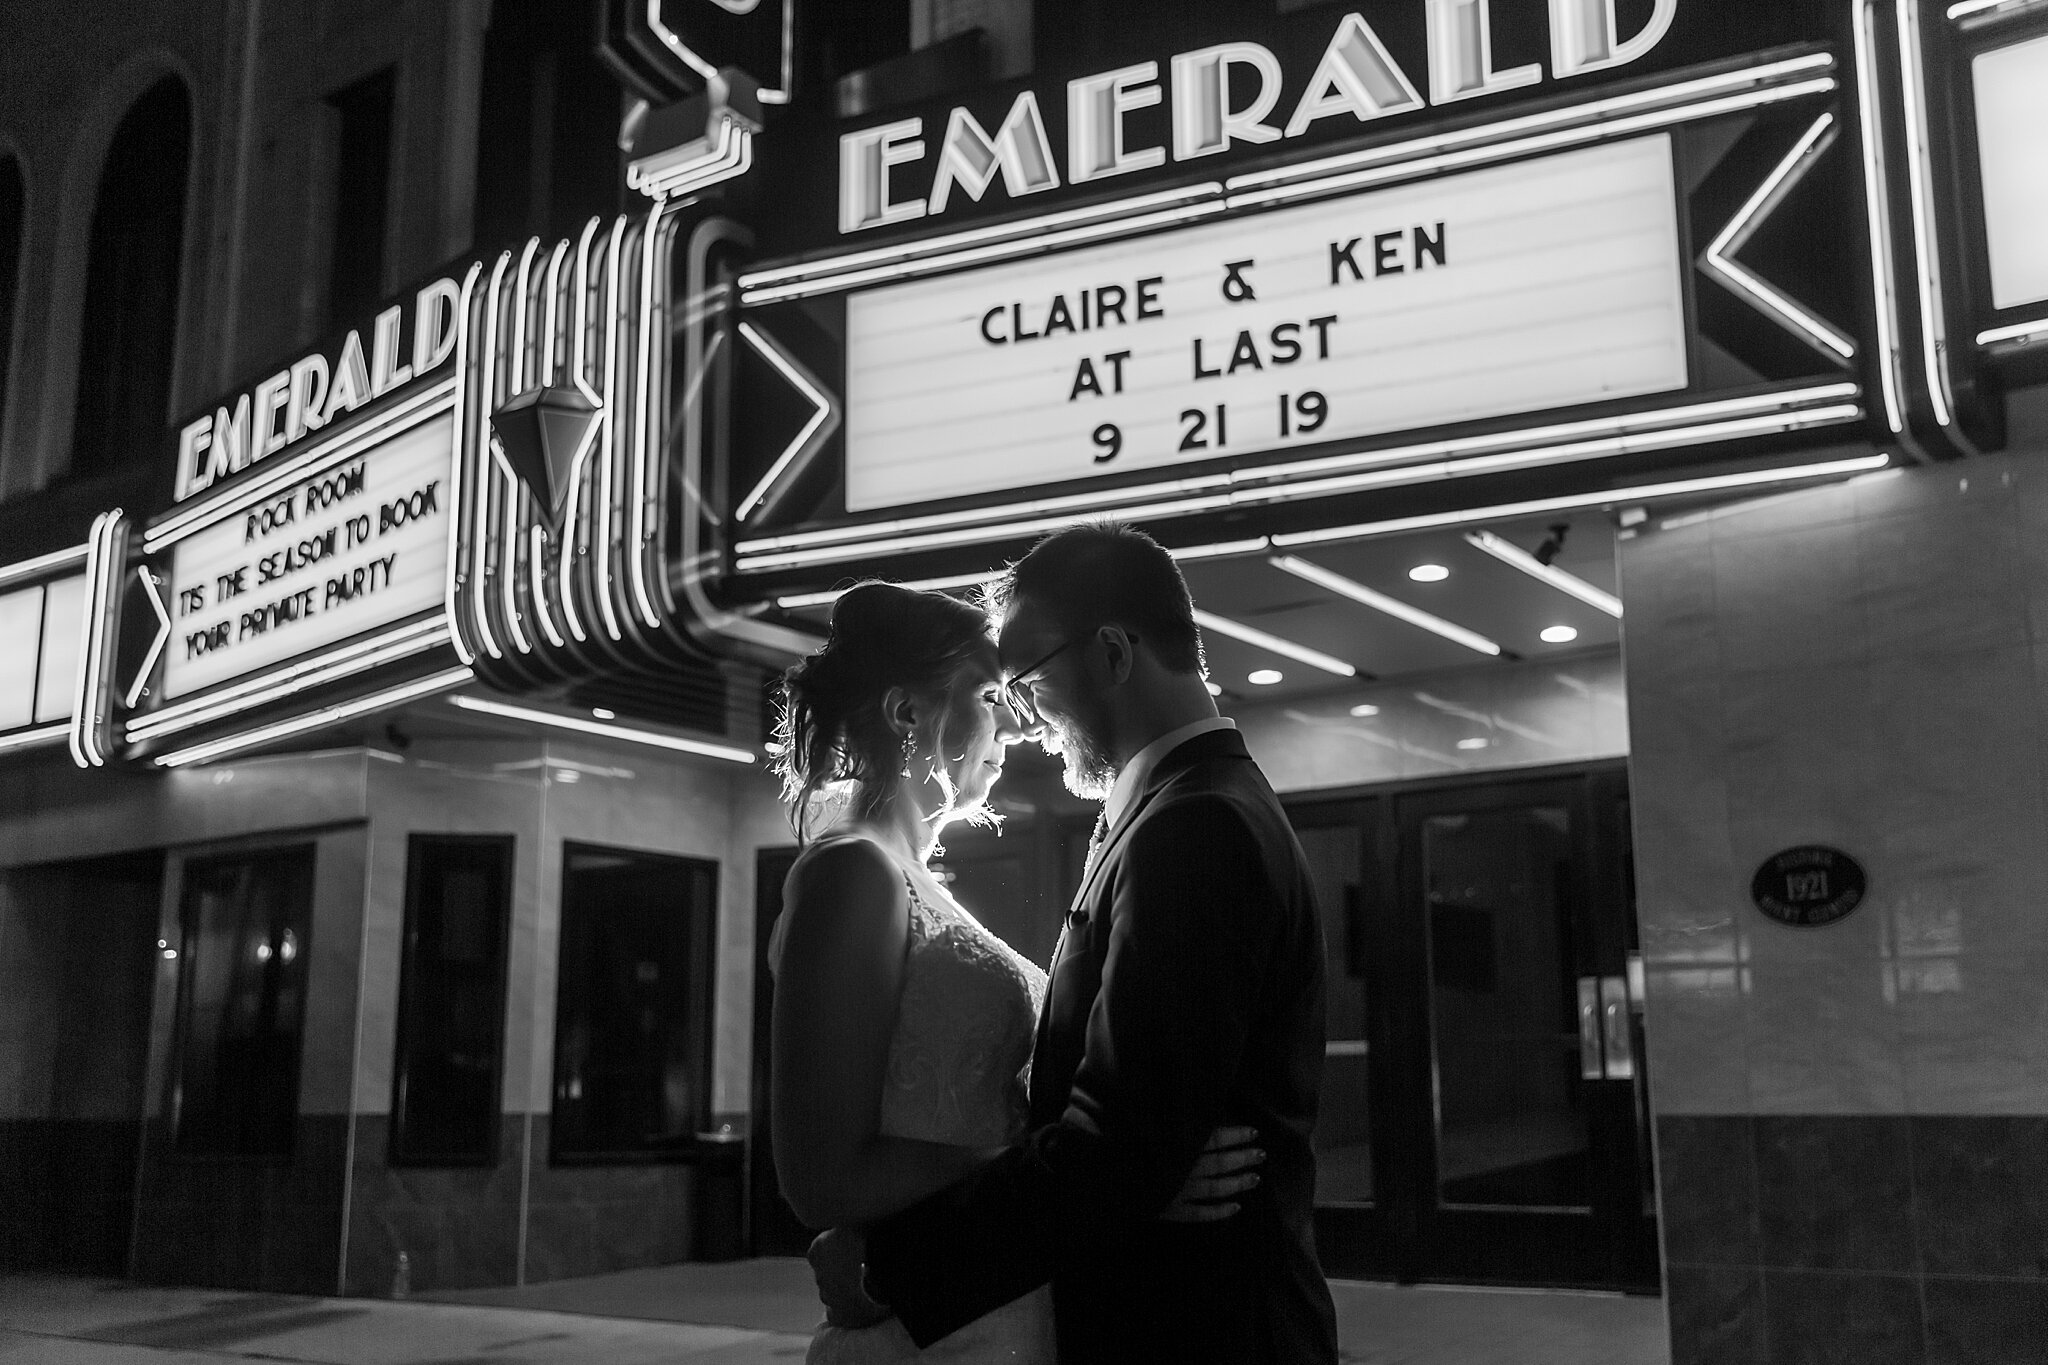 detroit-wedding-photographer-emerald-theatre-wedding-claire-ken-in-mt-clemens-mi-by-courtney-carolyn-photography_0120.jpg